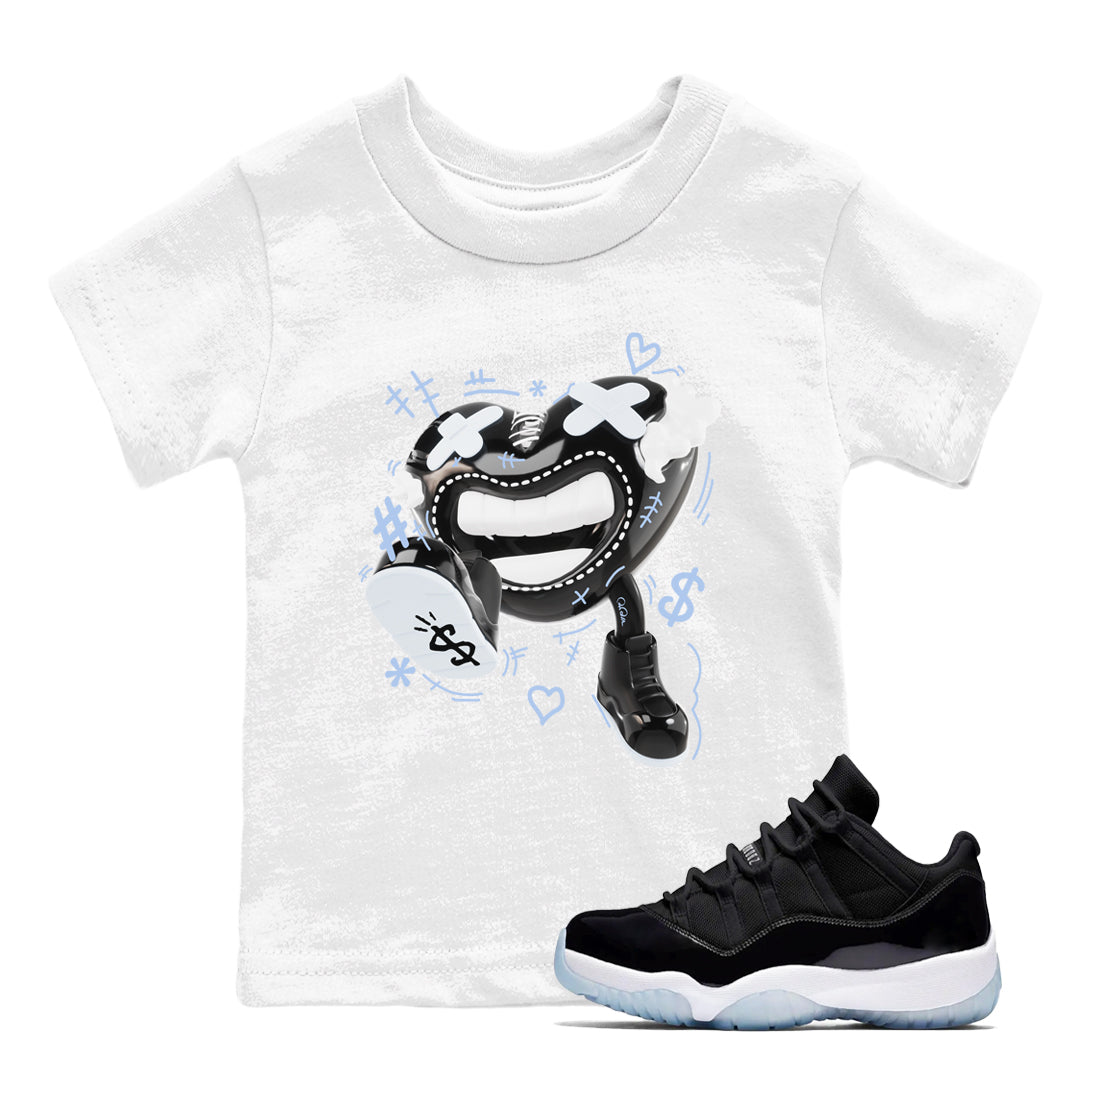 11s Space Jam shirt to match jordans Walk In Love sneaker tees Air Jordan 11 Space Jam SNRT Sneaker Release Tees Baby Toddler White 1 T-Shirt